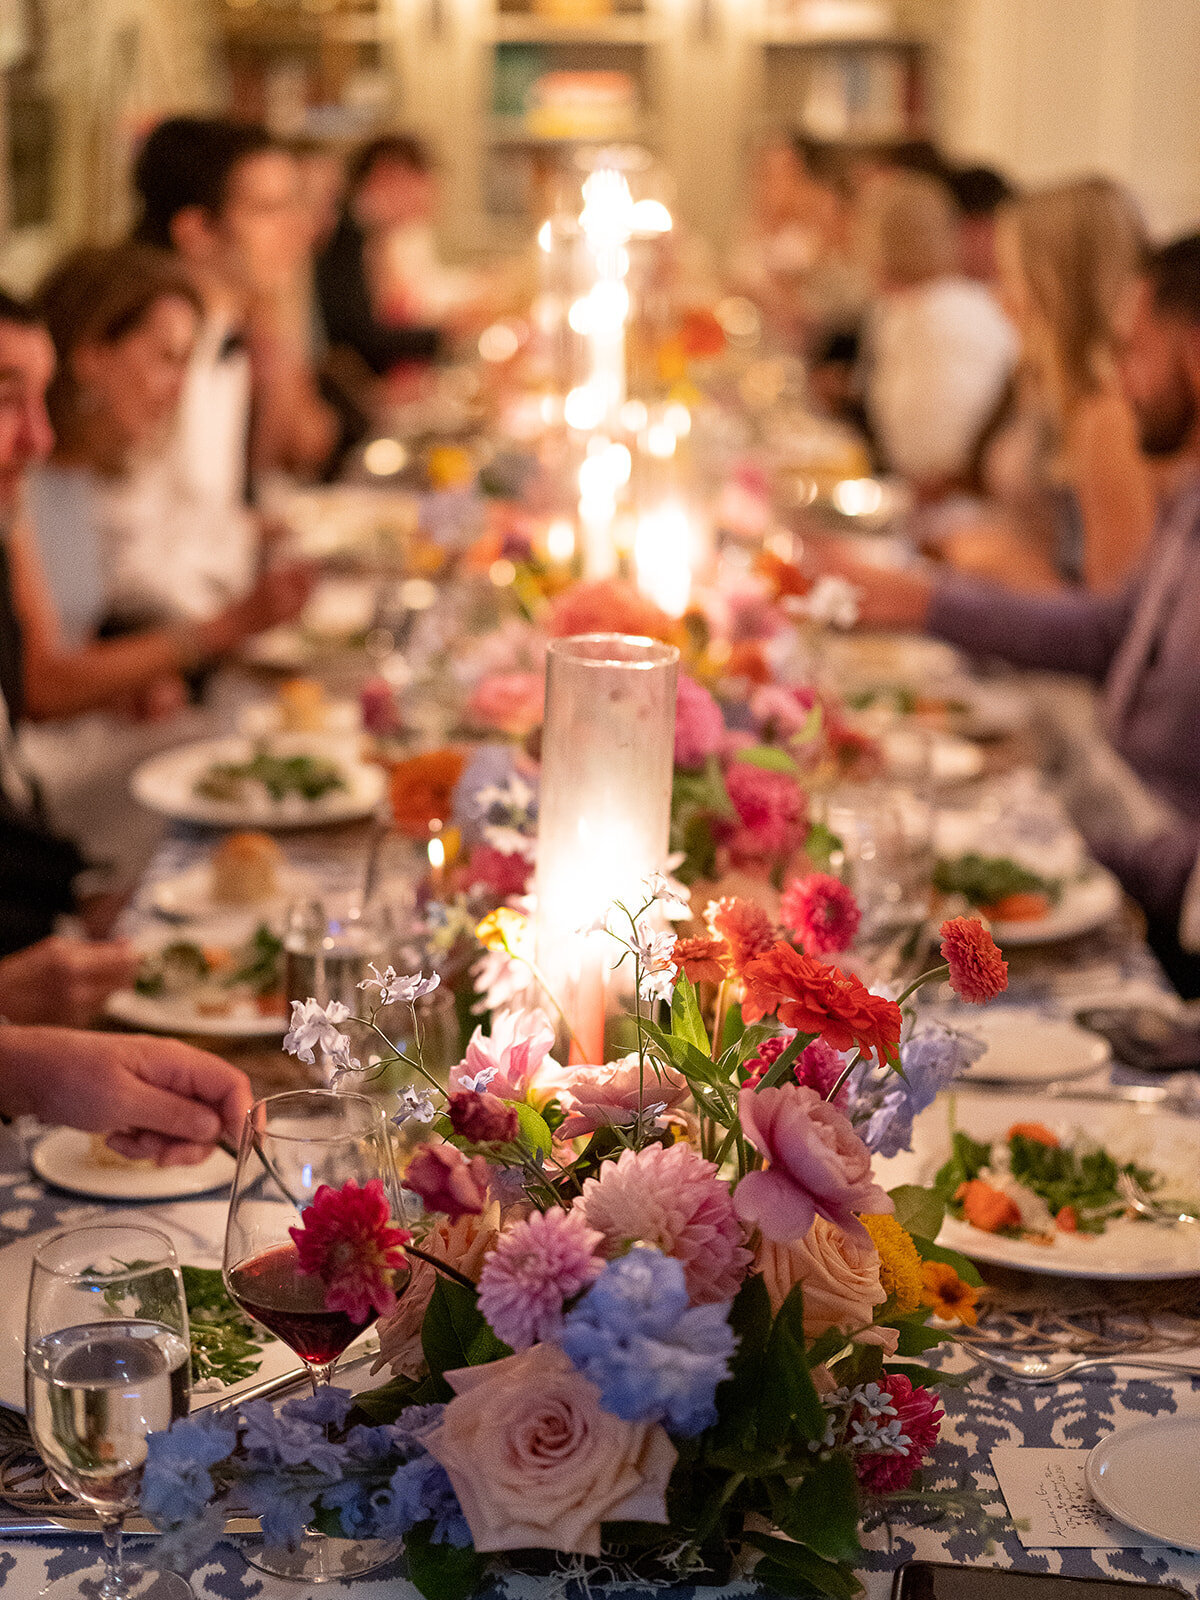 Kate-Murtaugh-Events-RI-wedding-planner-micro-wedding-Inn-at-Hastings-Park-Lexington-Boston-MA-luxury-elopement-candlelight-dinner-table